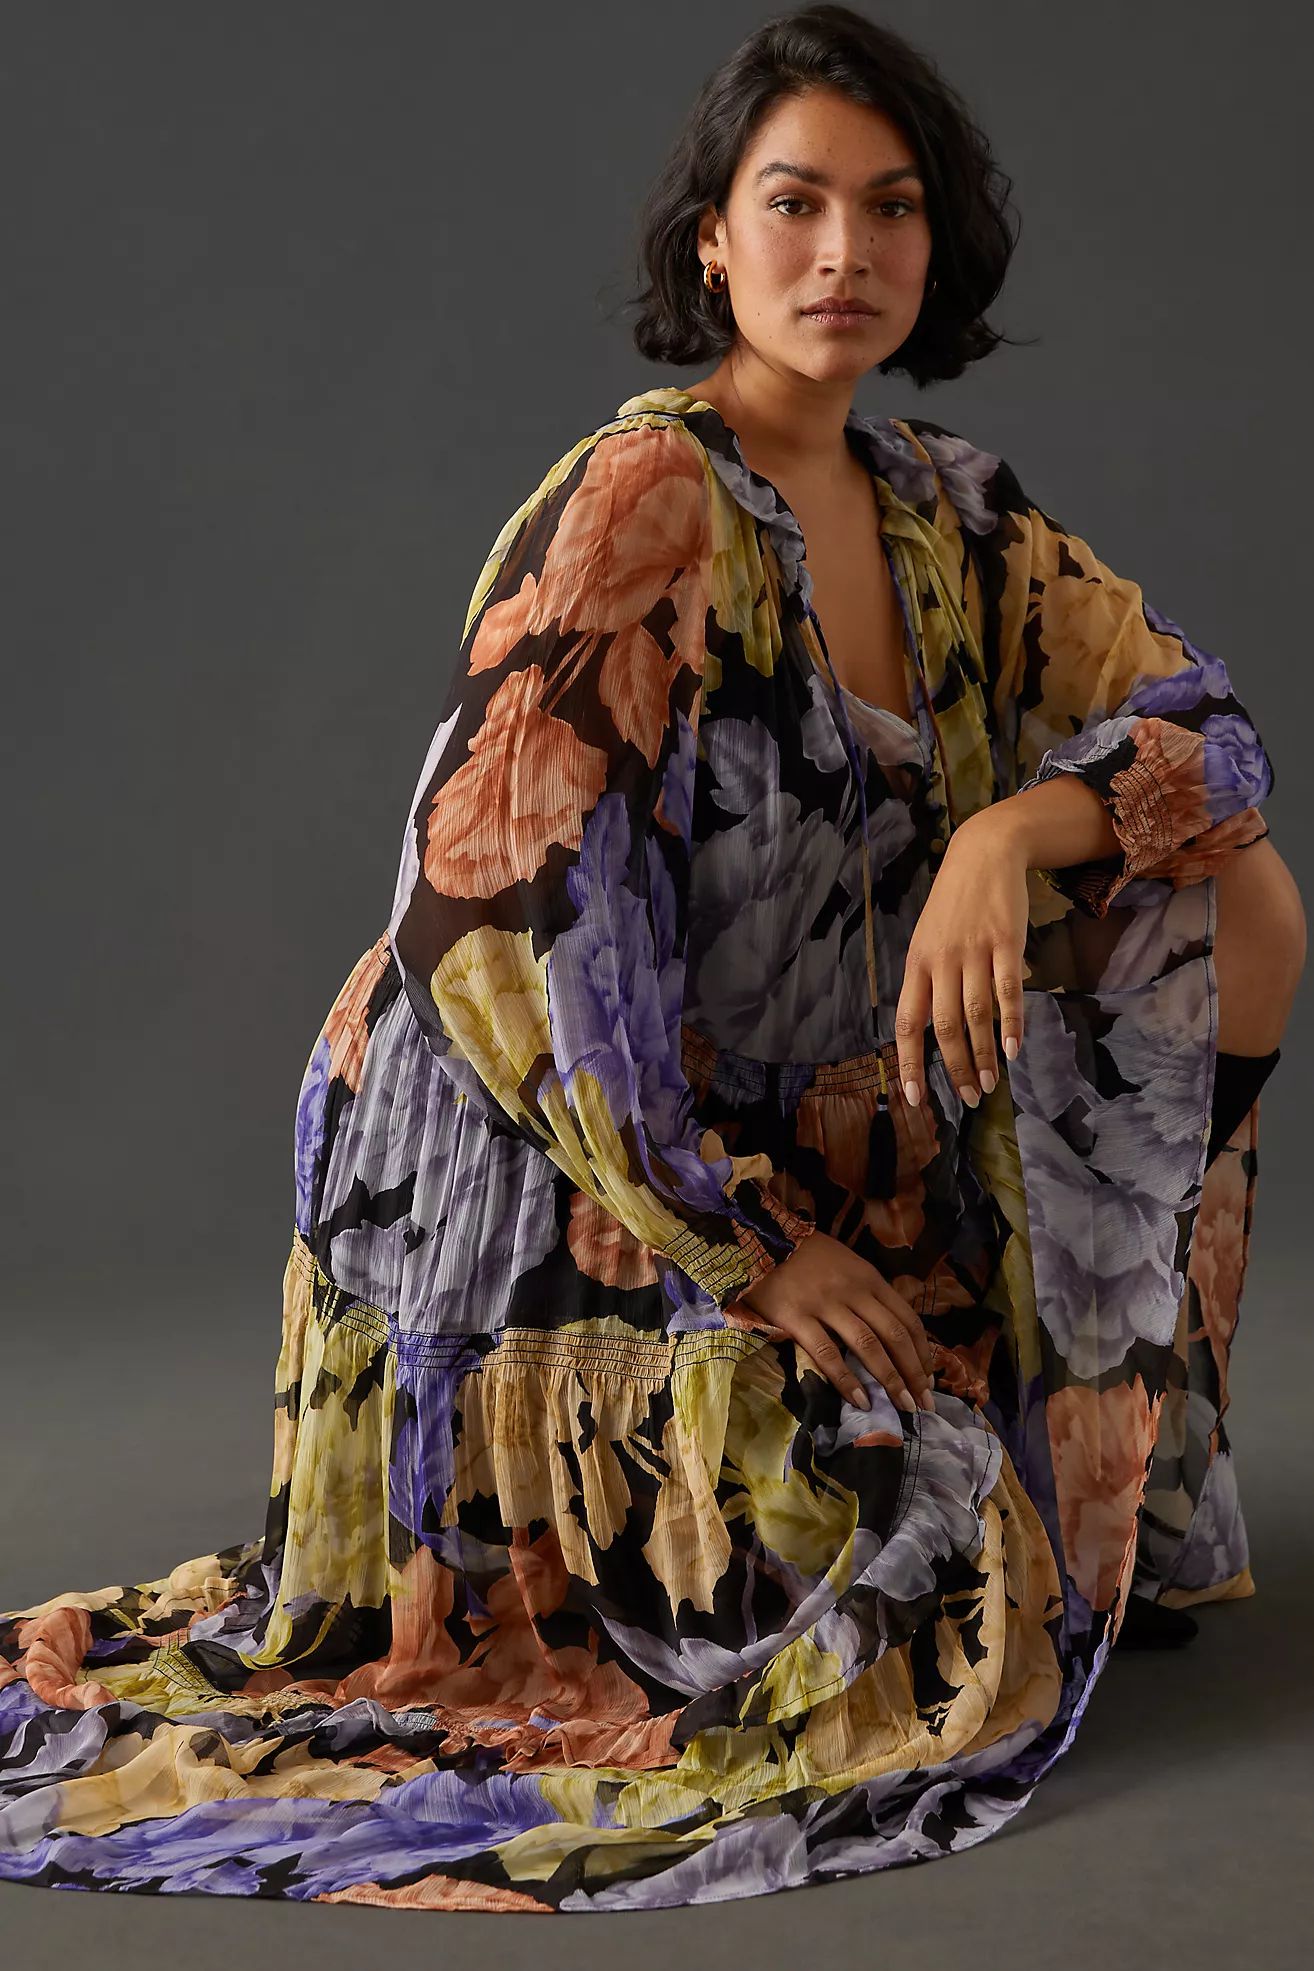 The Marais Printed Chiffon Maxi Dress | Anthropologie (US)